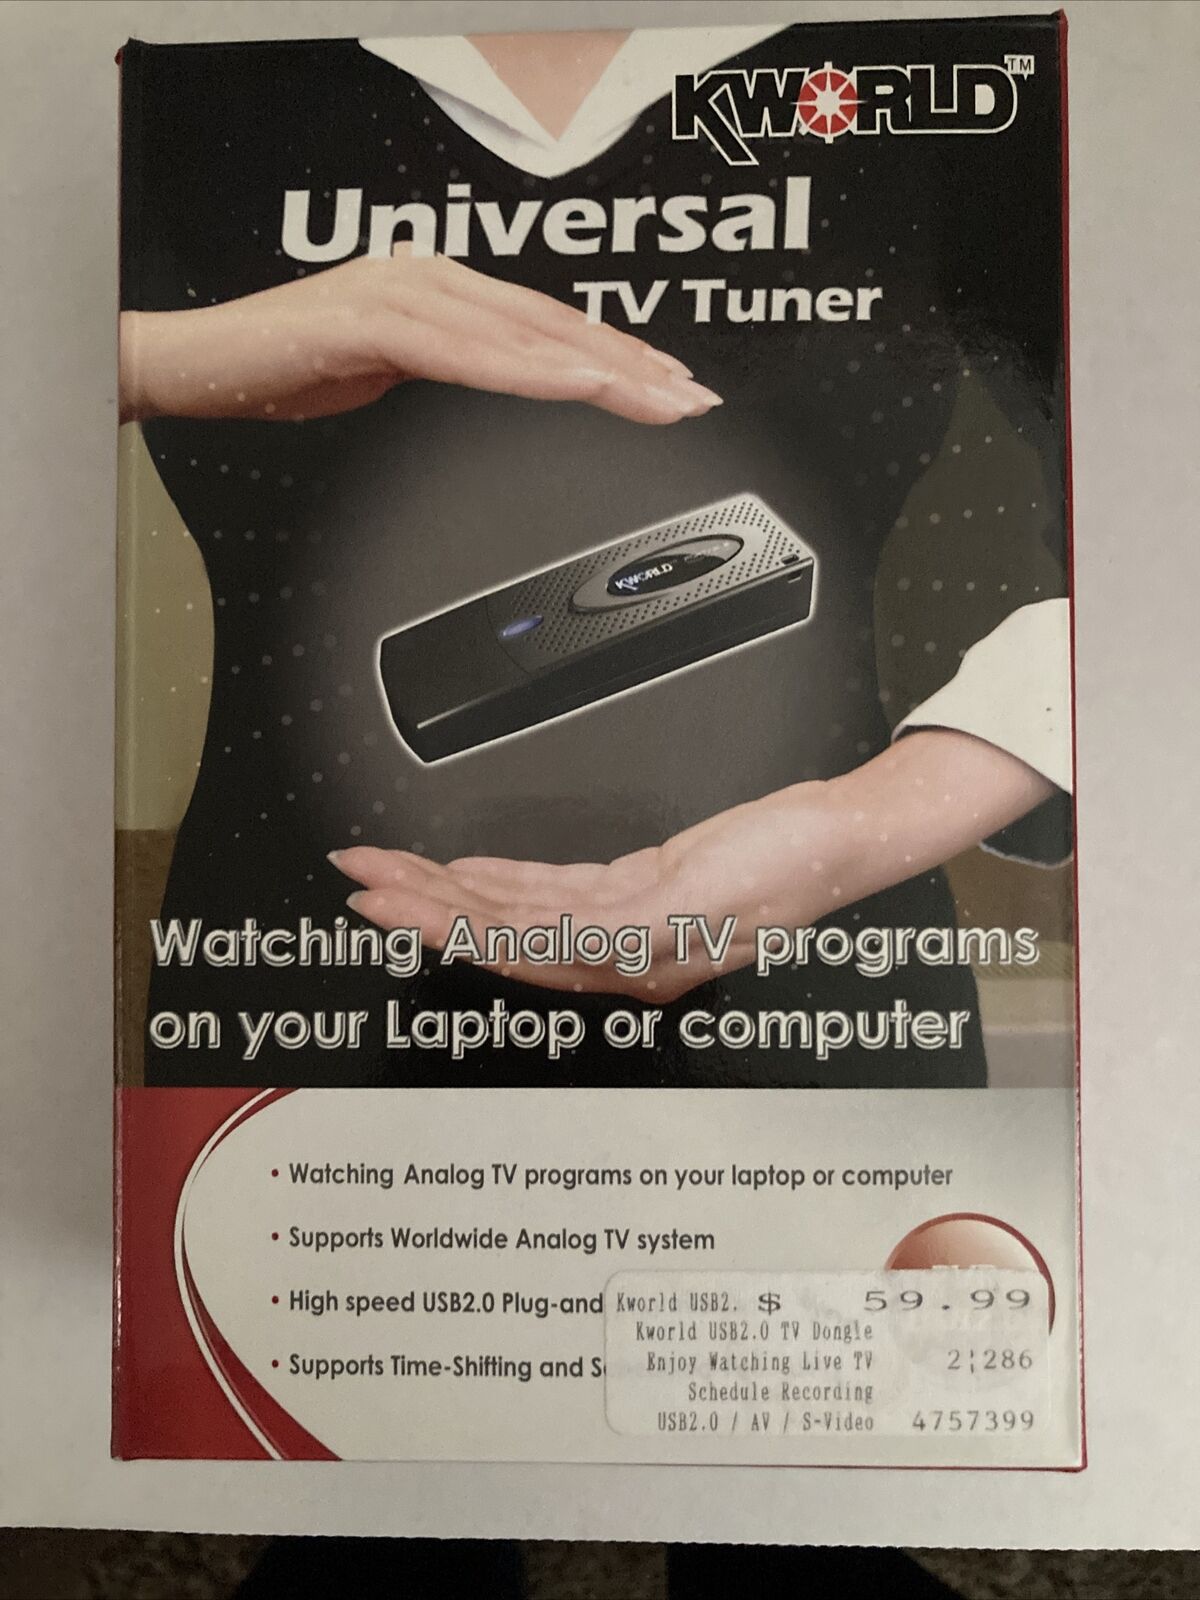 KWORLD Universal TV Tuner. Watch Analog TV Programs On Your Laptop Or Computer